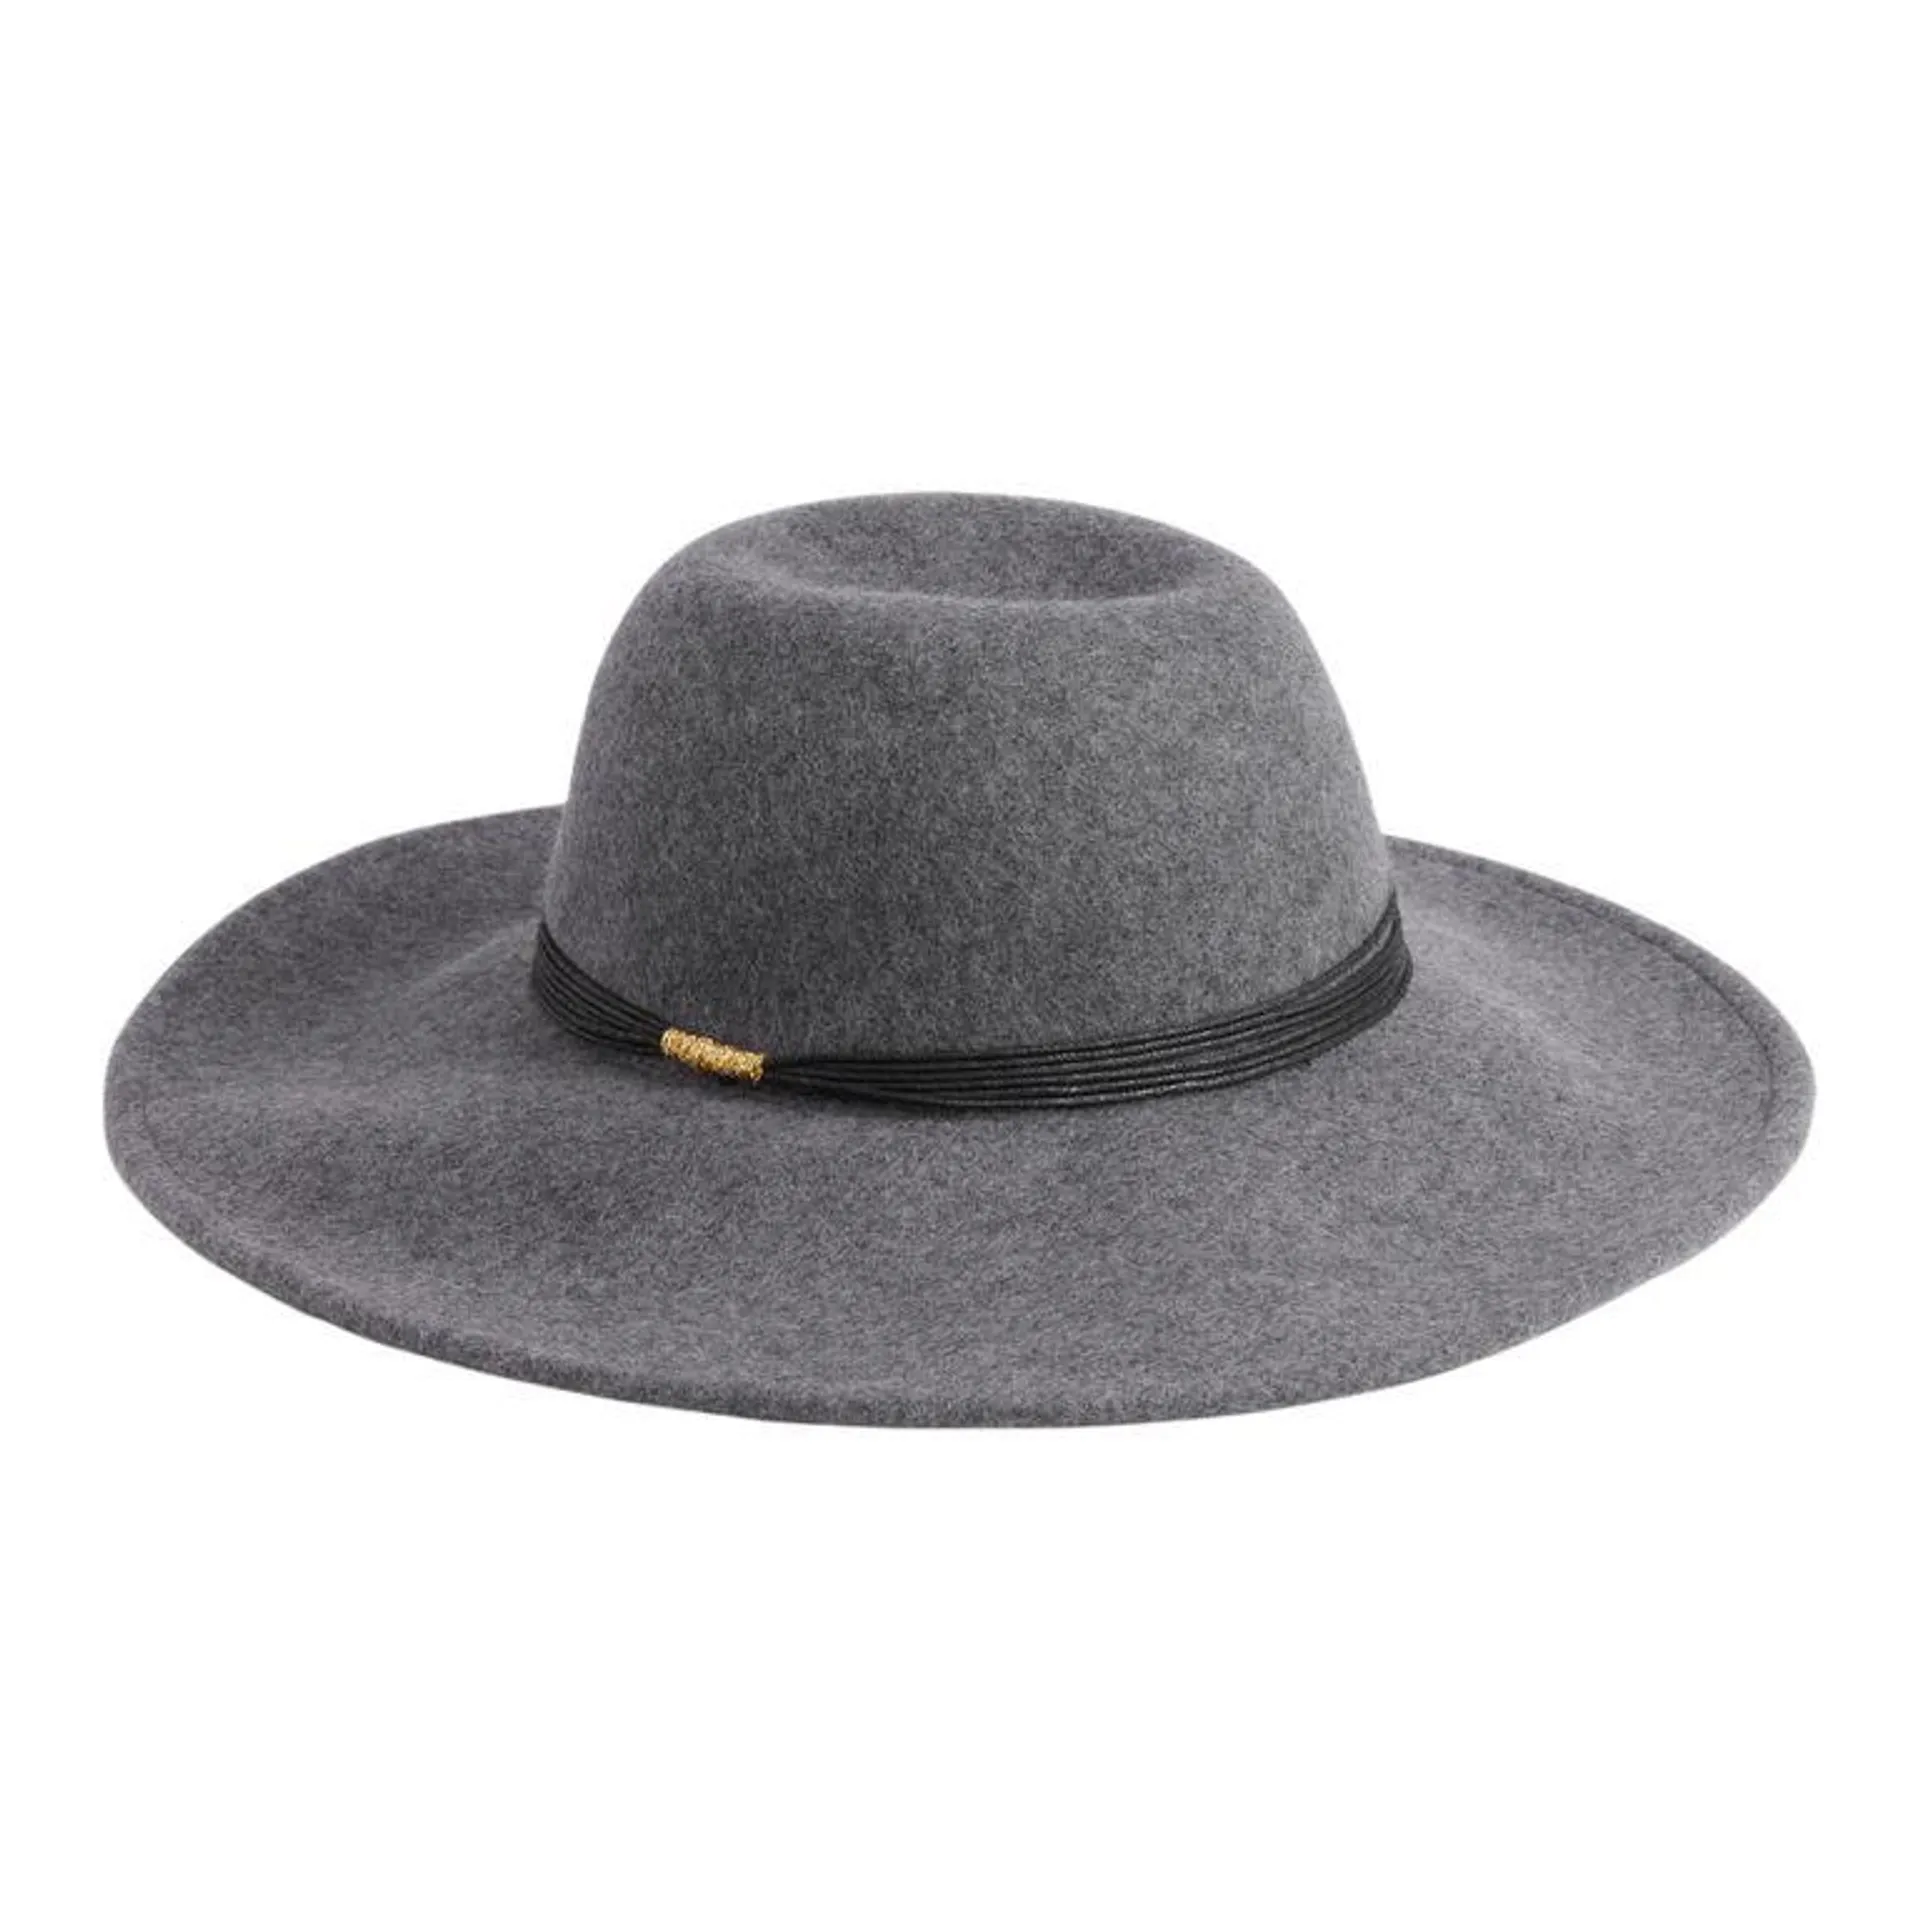 Heathered Gray Wool Floppy Hat With Black Trim